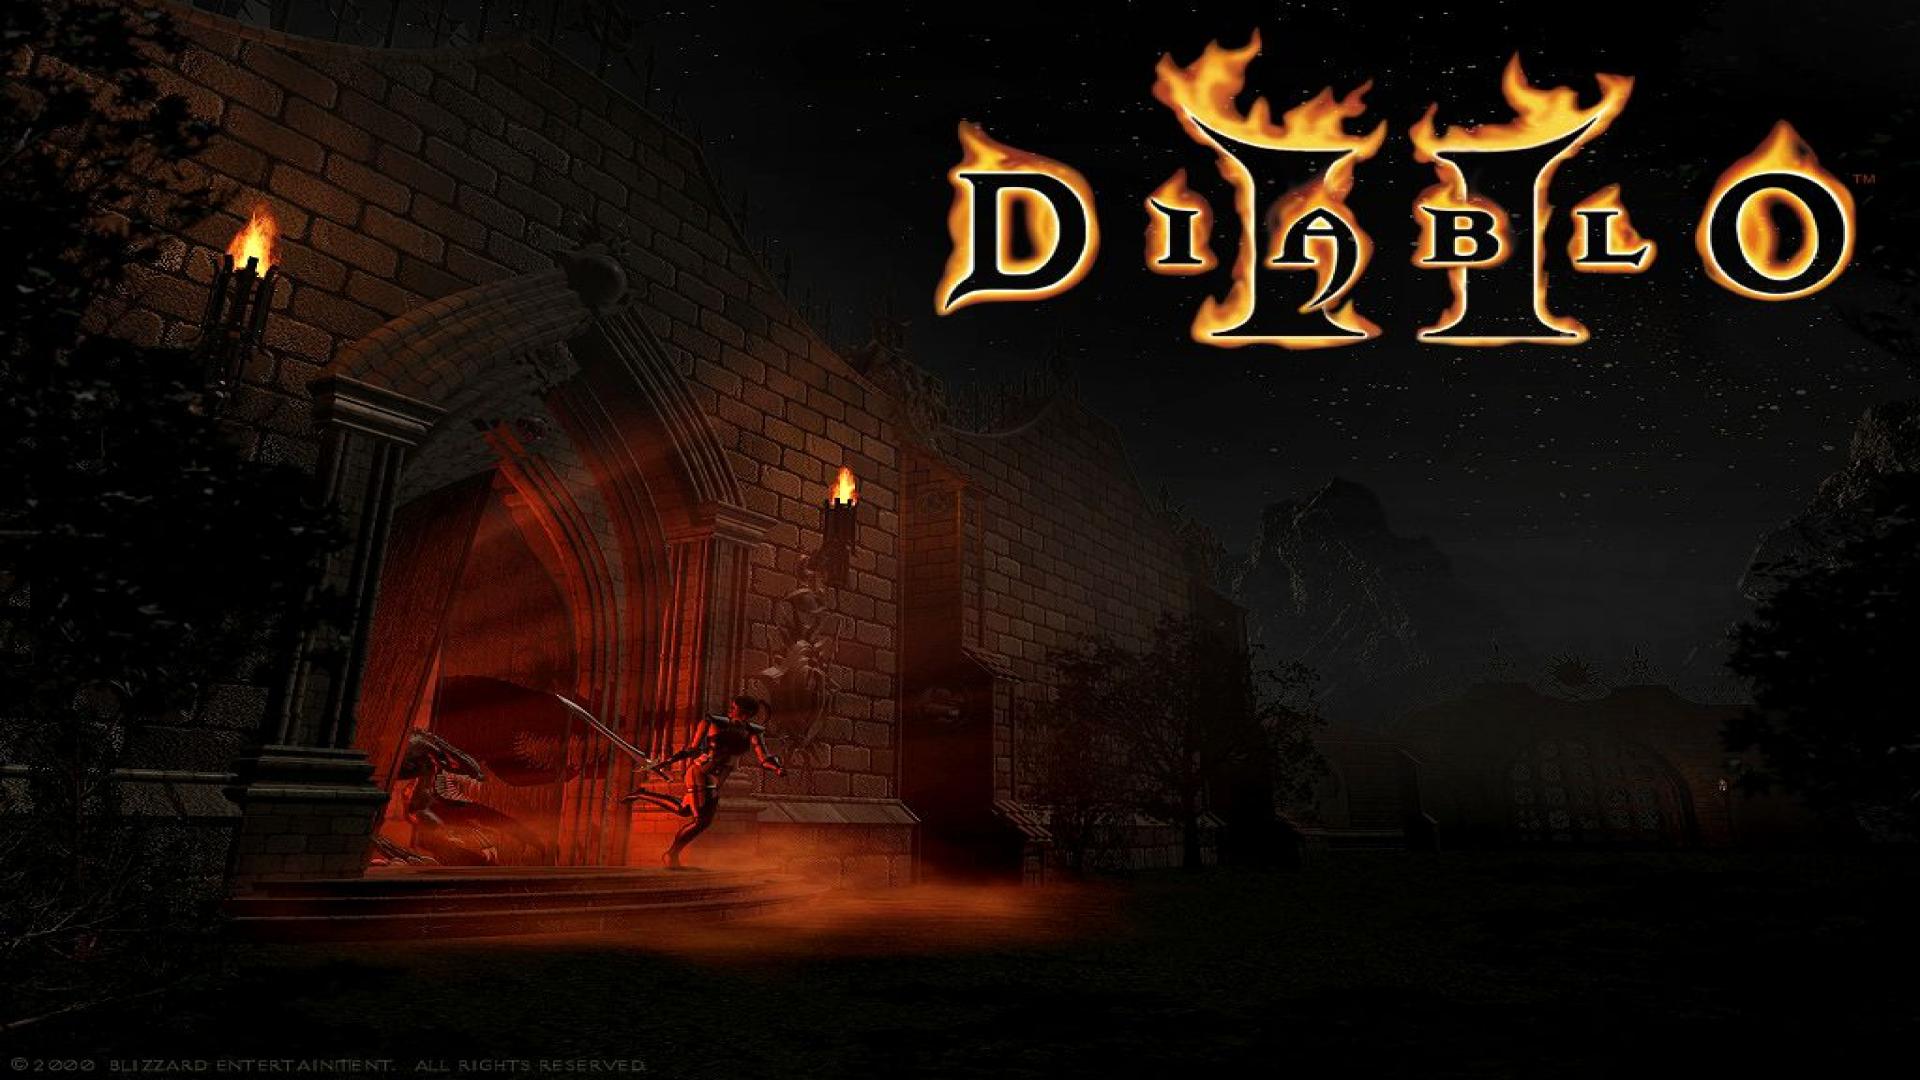 Wallpaper diabloii 11jpg at 1920x1080 for Diablo 2 on PC